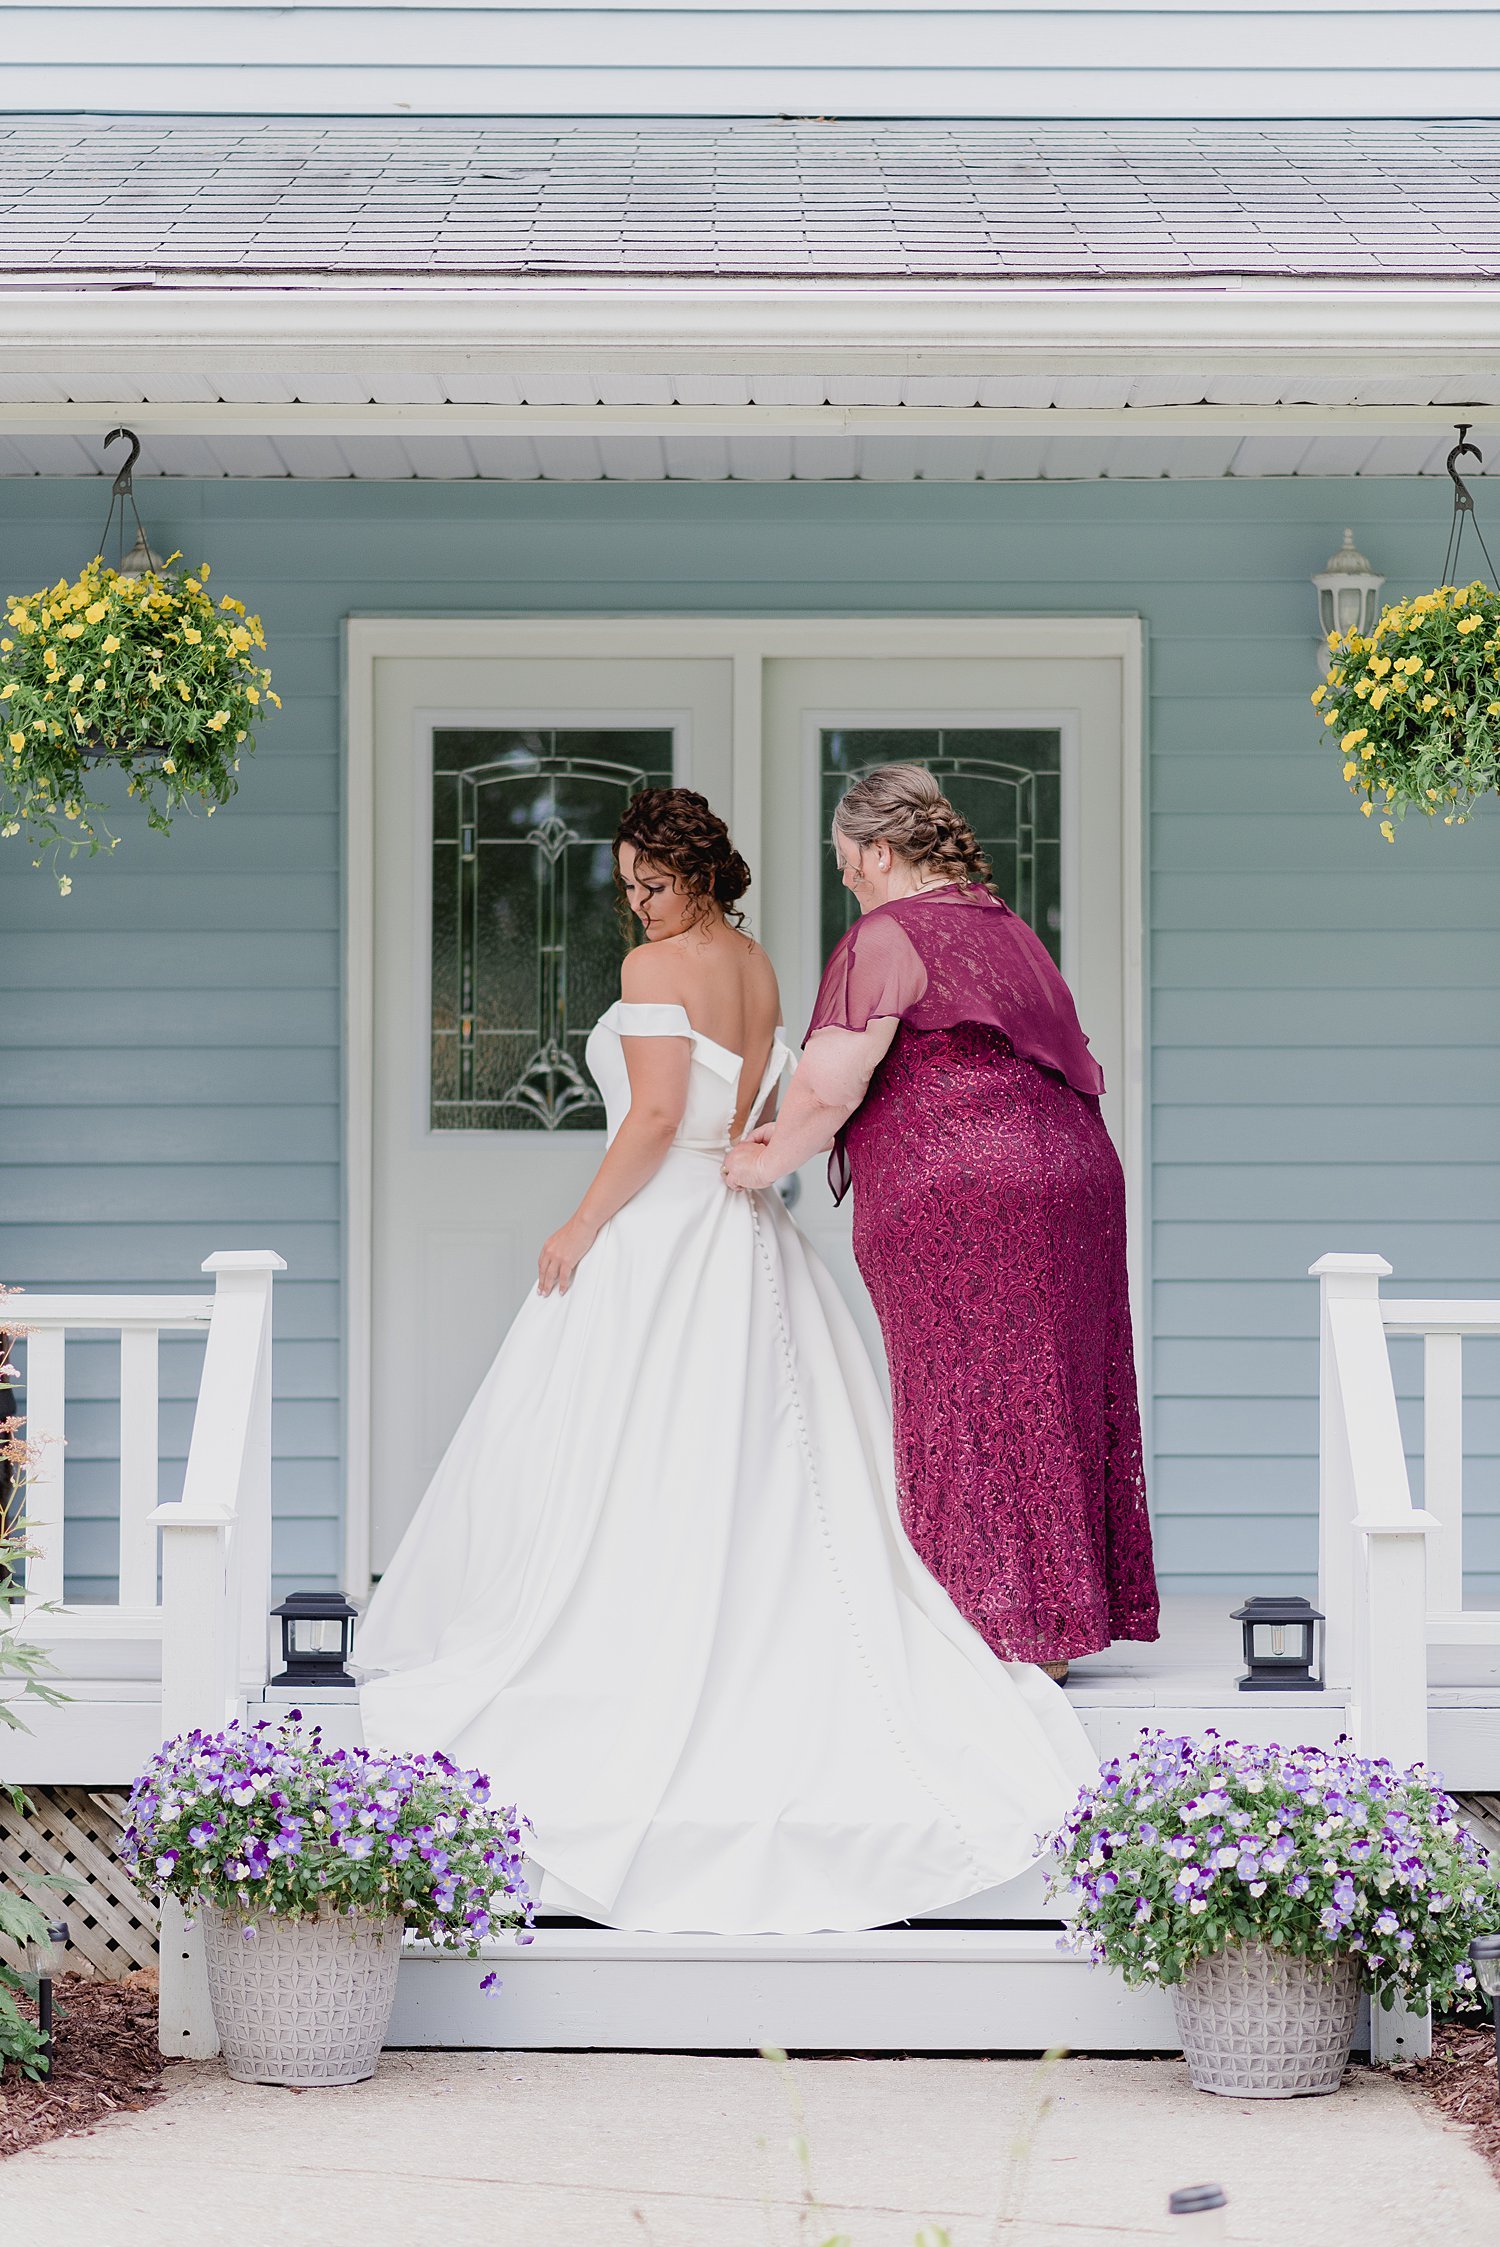 Elegant Summer Backyard Tented Wedding in Sydenham, Ontario | Prince Edward County Wedding Photographer | Holly McMurter Photographs_0003.jpg